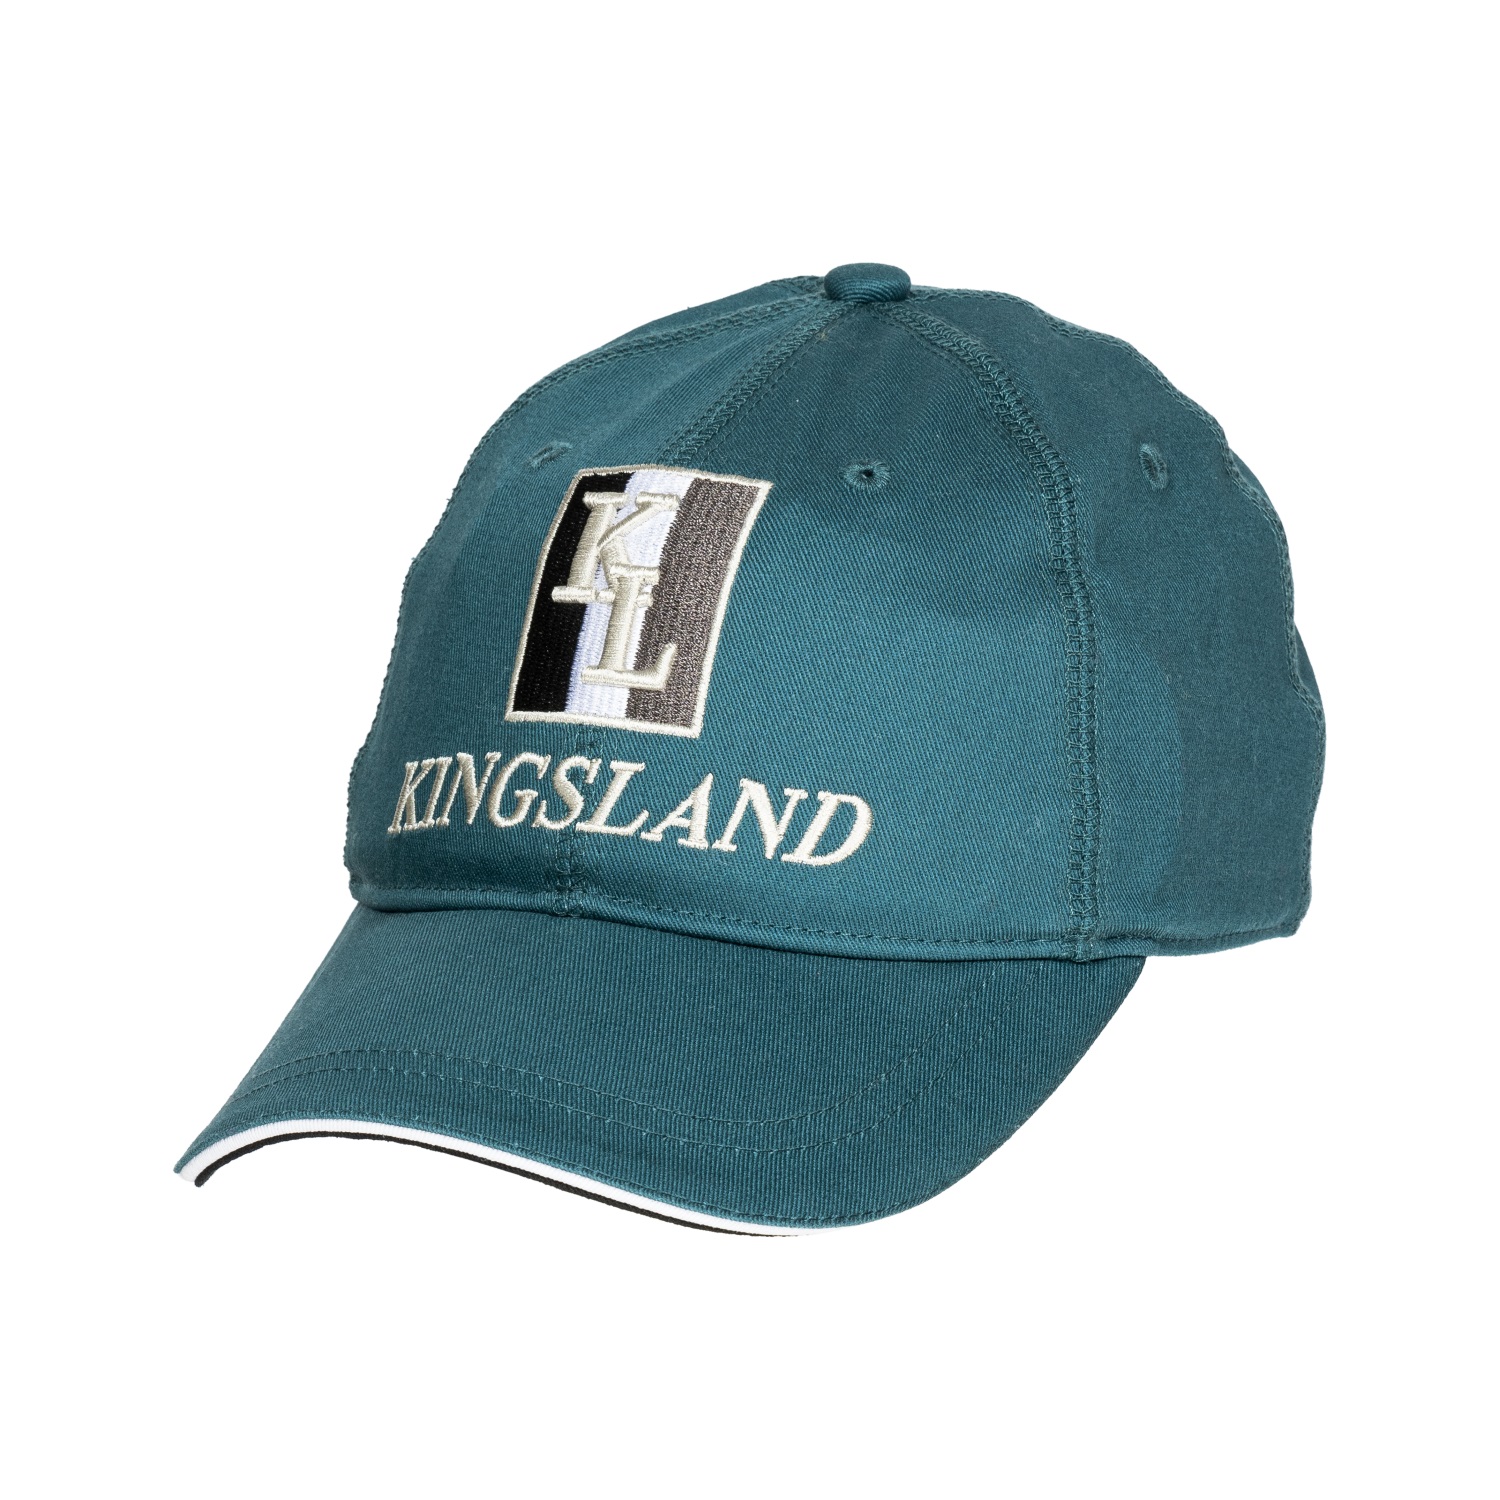 KINGSLAND Unisex Classic Limited Cap, Basecap - green deep - onesize - 7